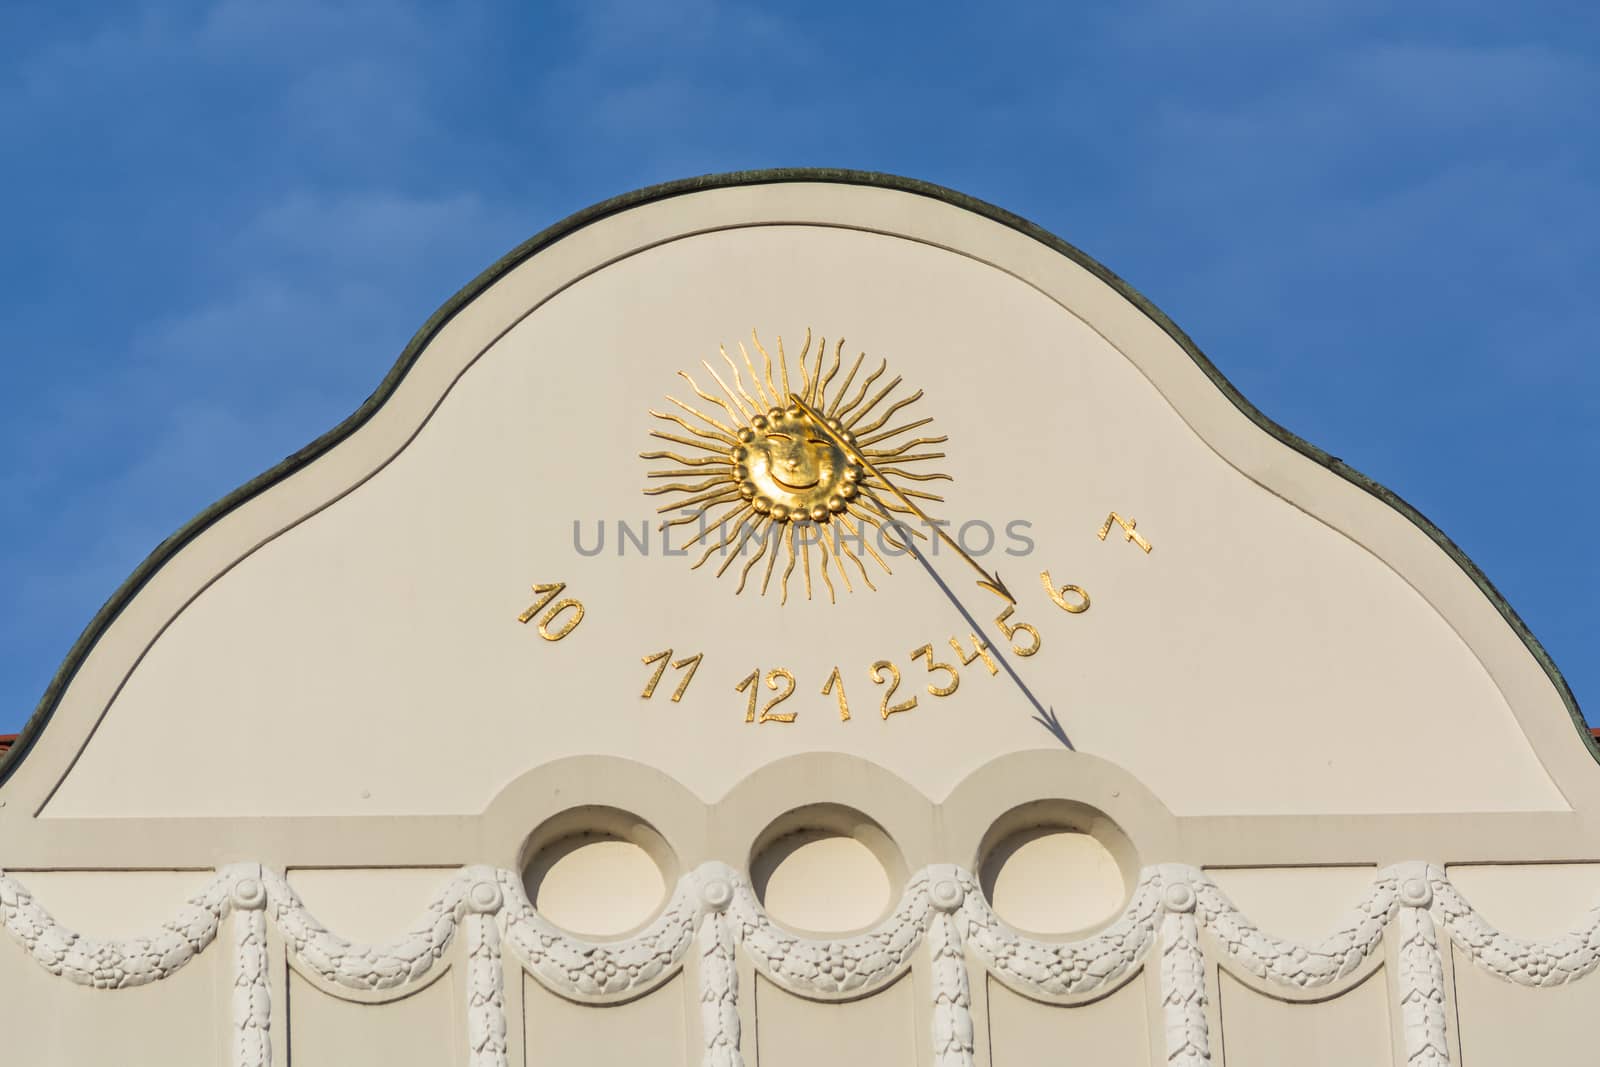 Sundial clock in Essen-Kettwig on a house facade